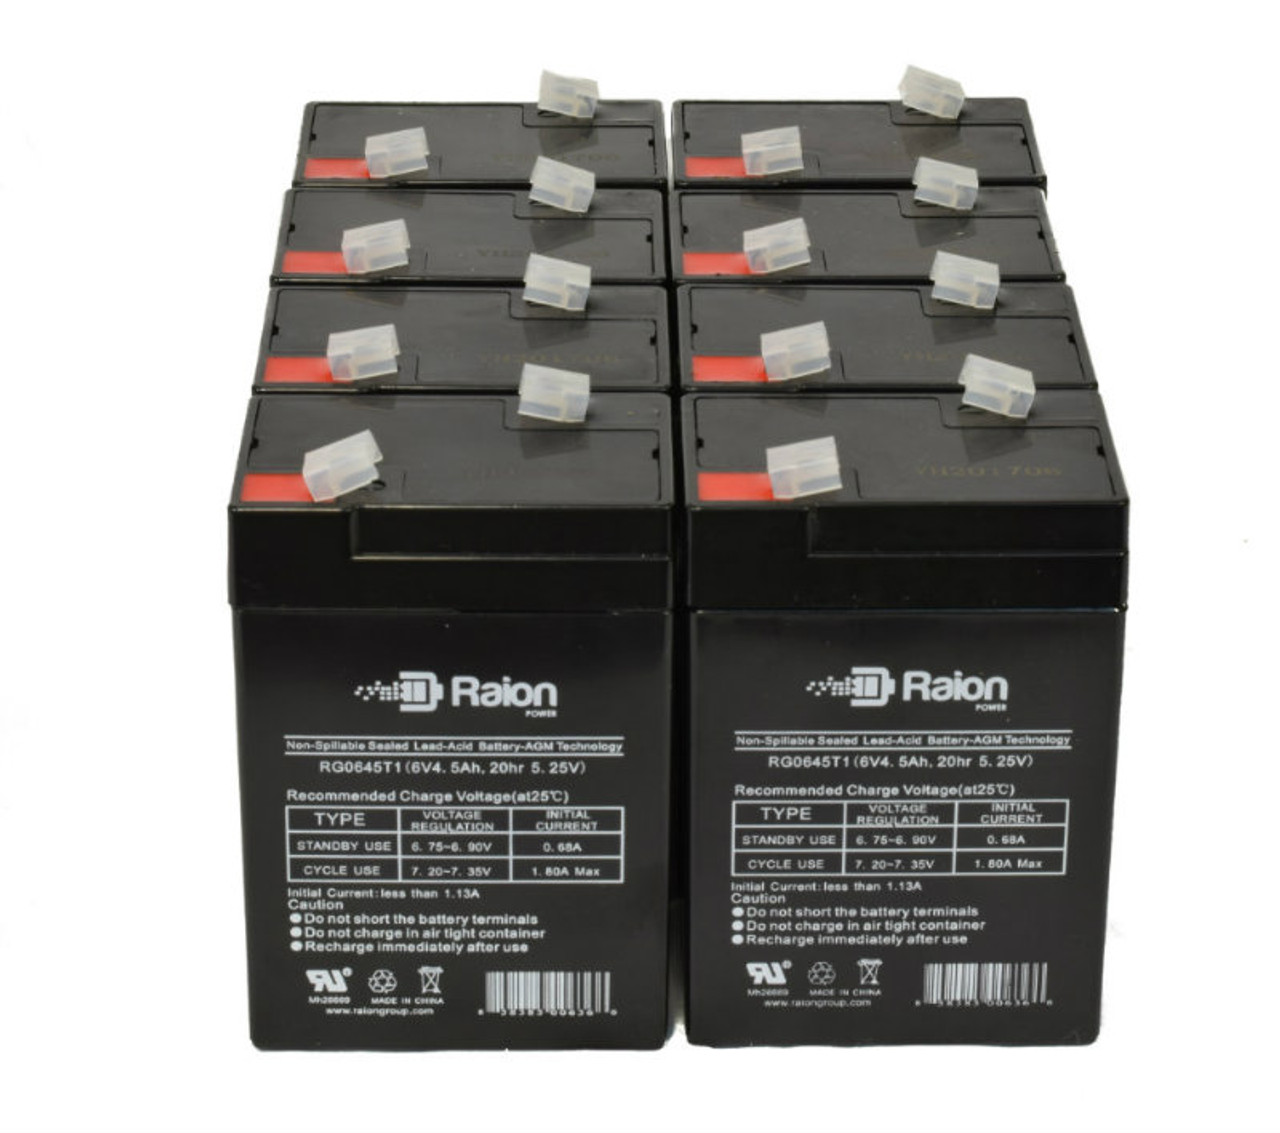 Raion Power 6V 4.5Ah Replacement Emergency Light Battery for Sentry Lite SCR-525-21 - 8 Pack